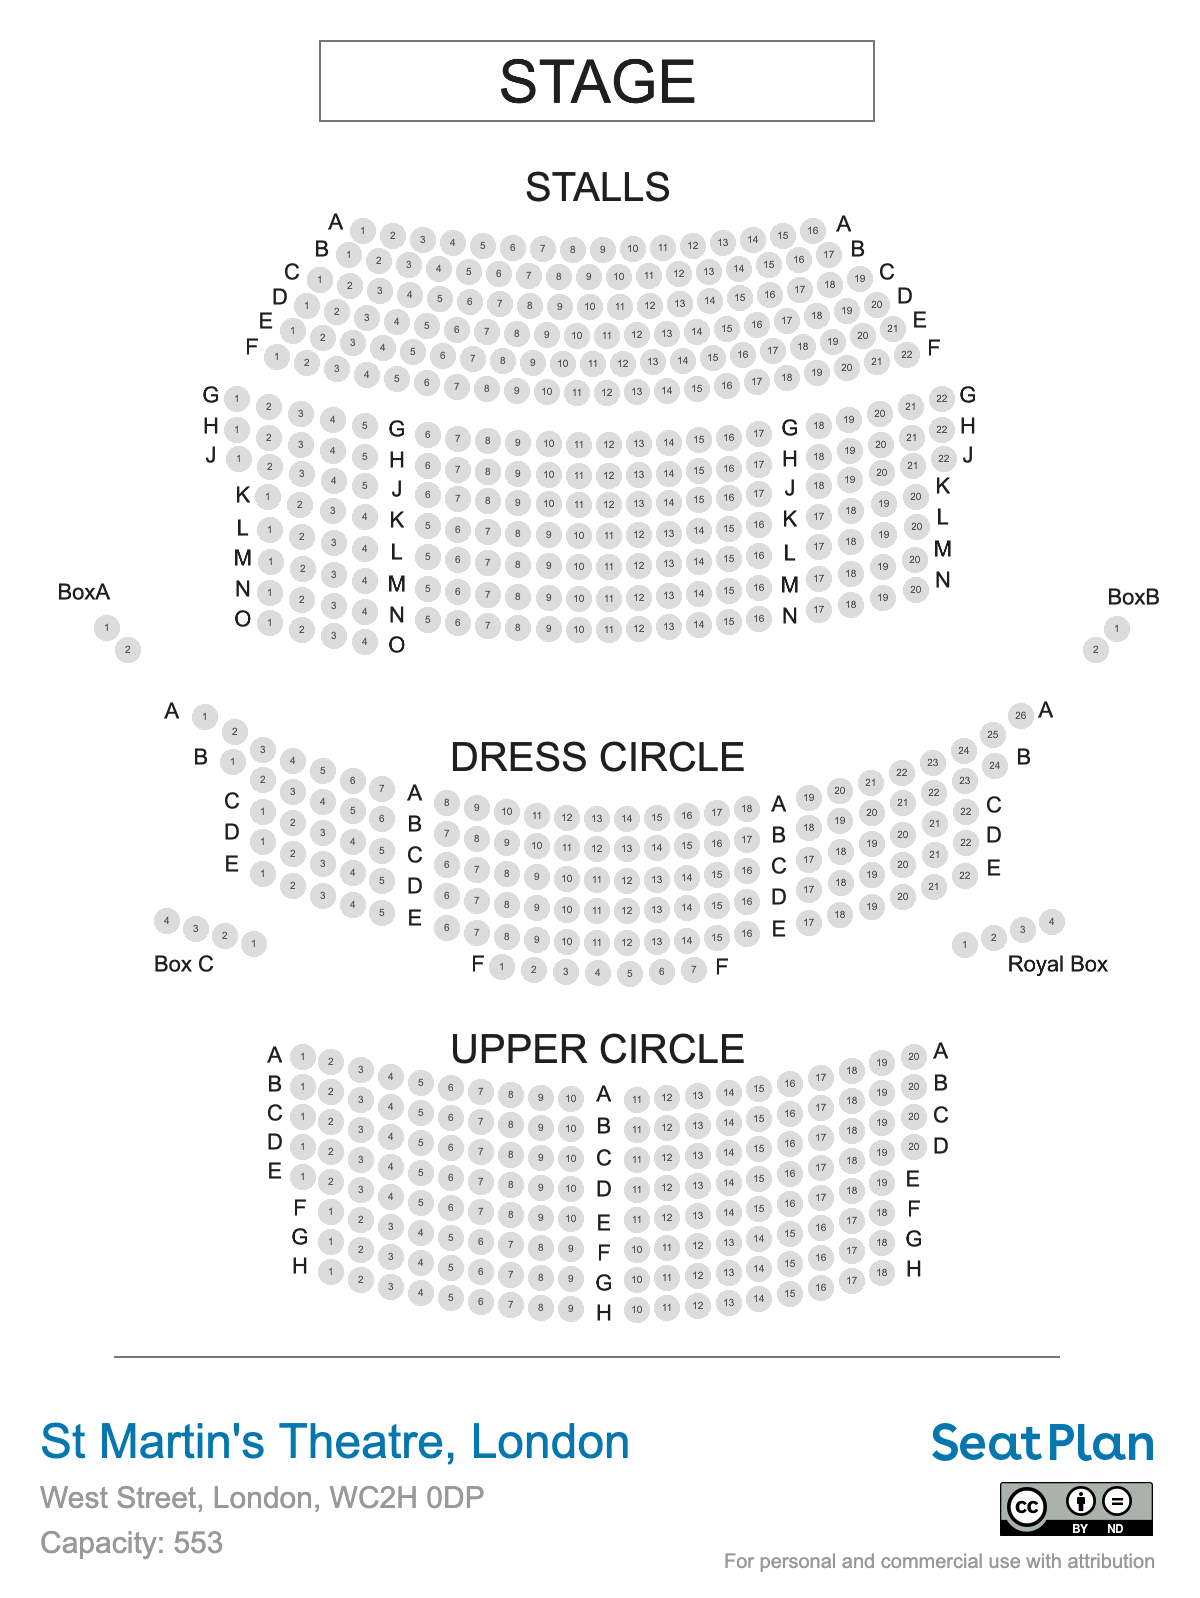 St Martin's Theatre seating plan